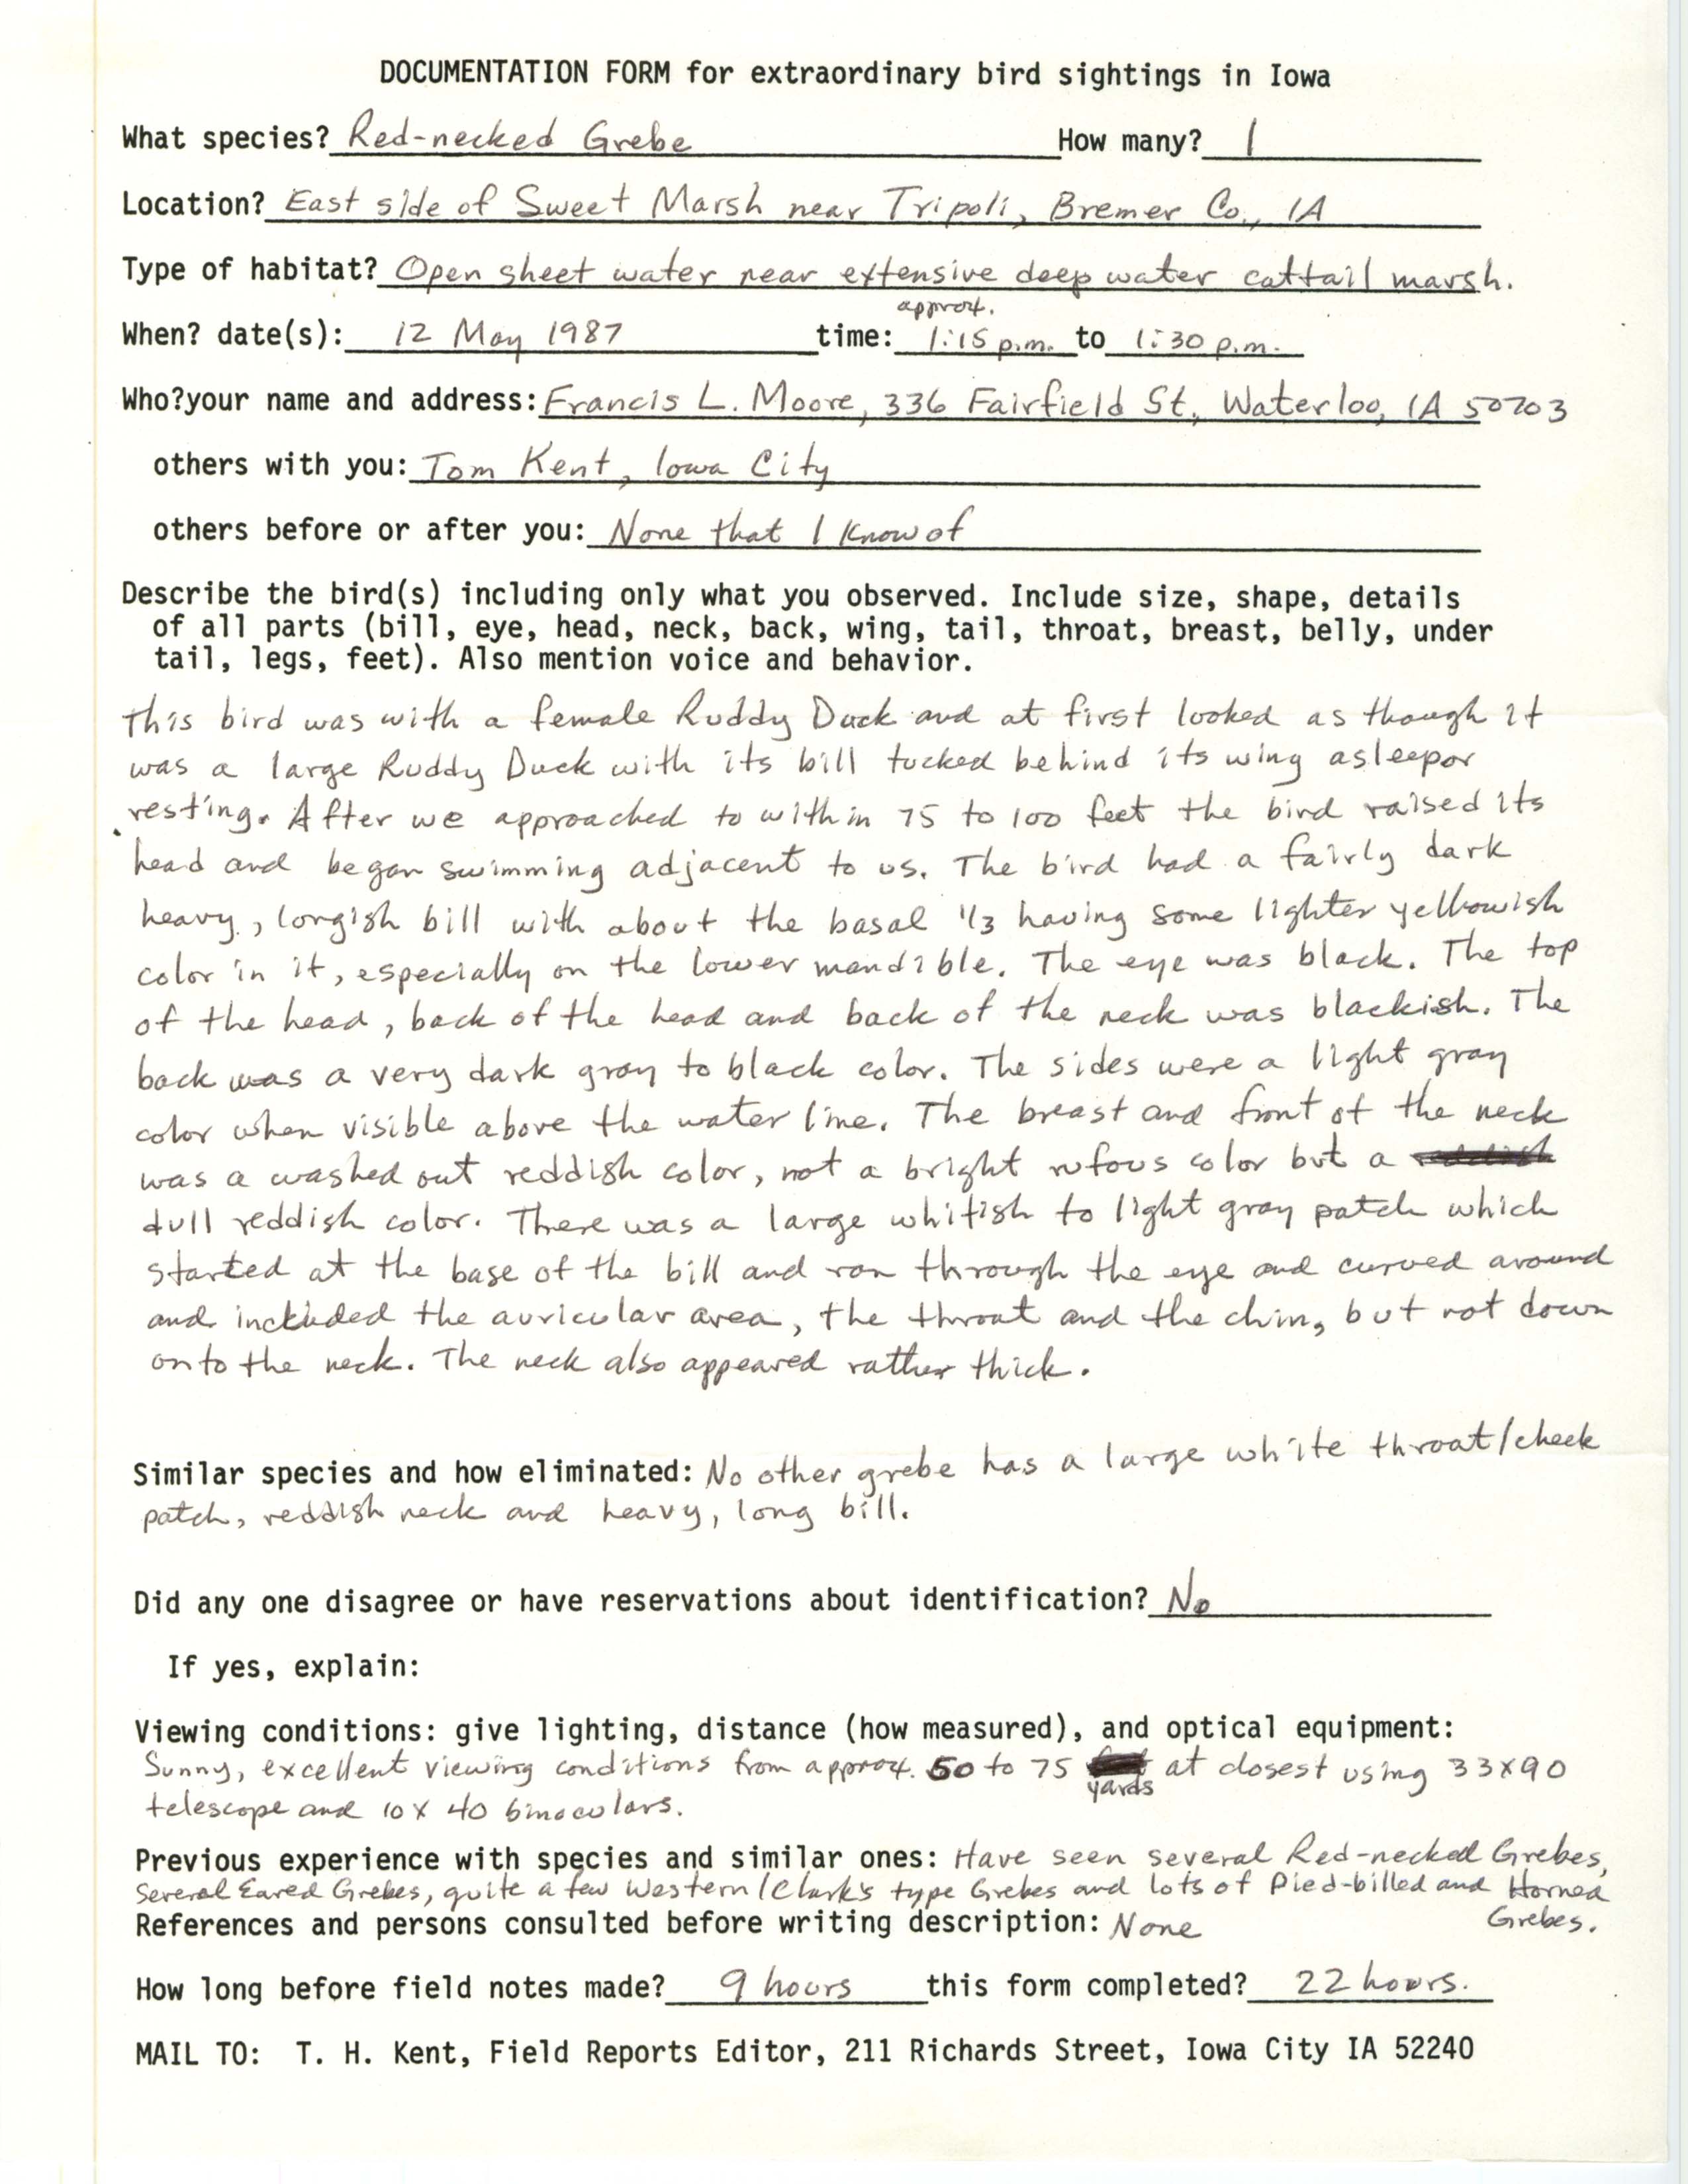 Documentation form for extraordinary bird sightings in Iowa regarding a Red-necked Grebe, 1987